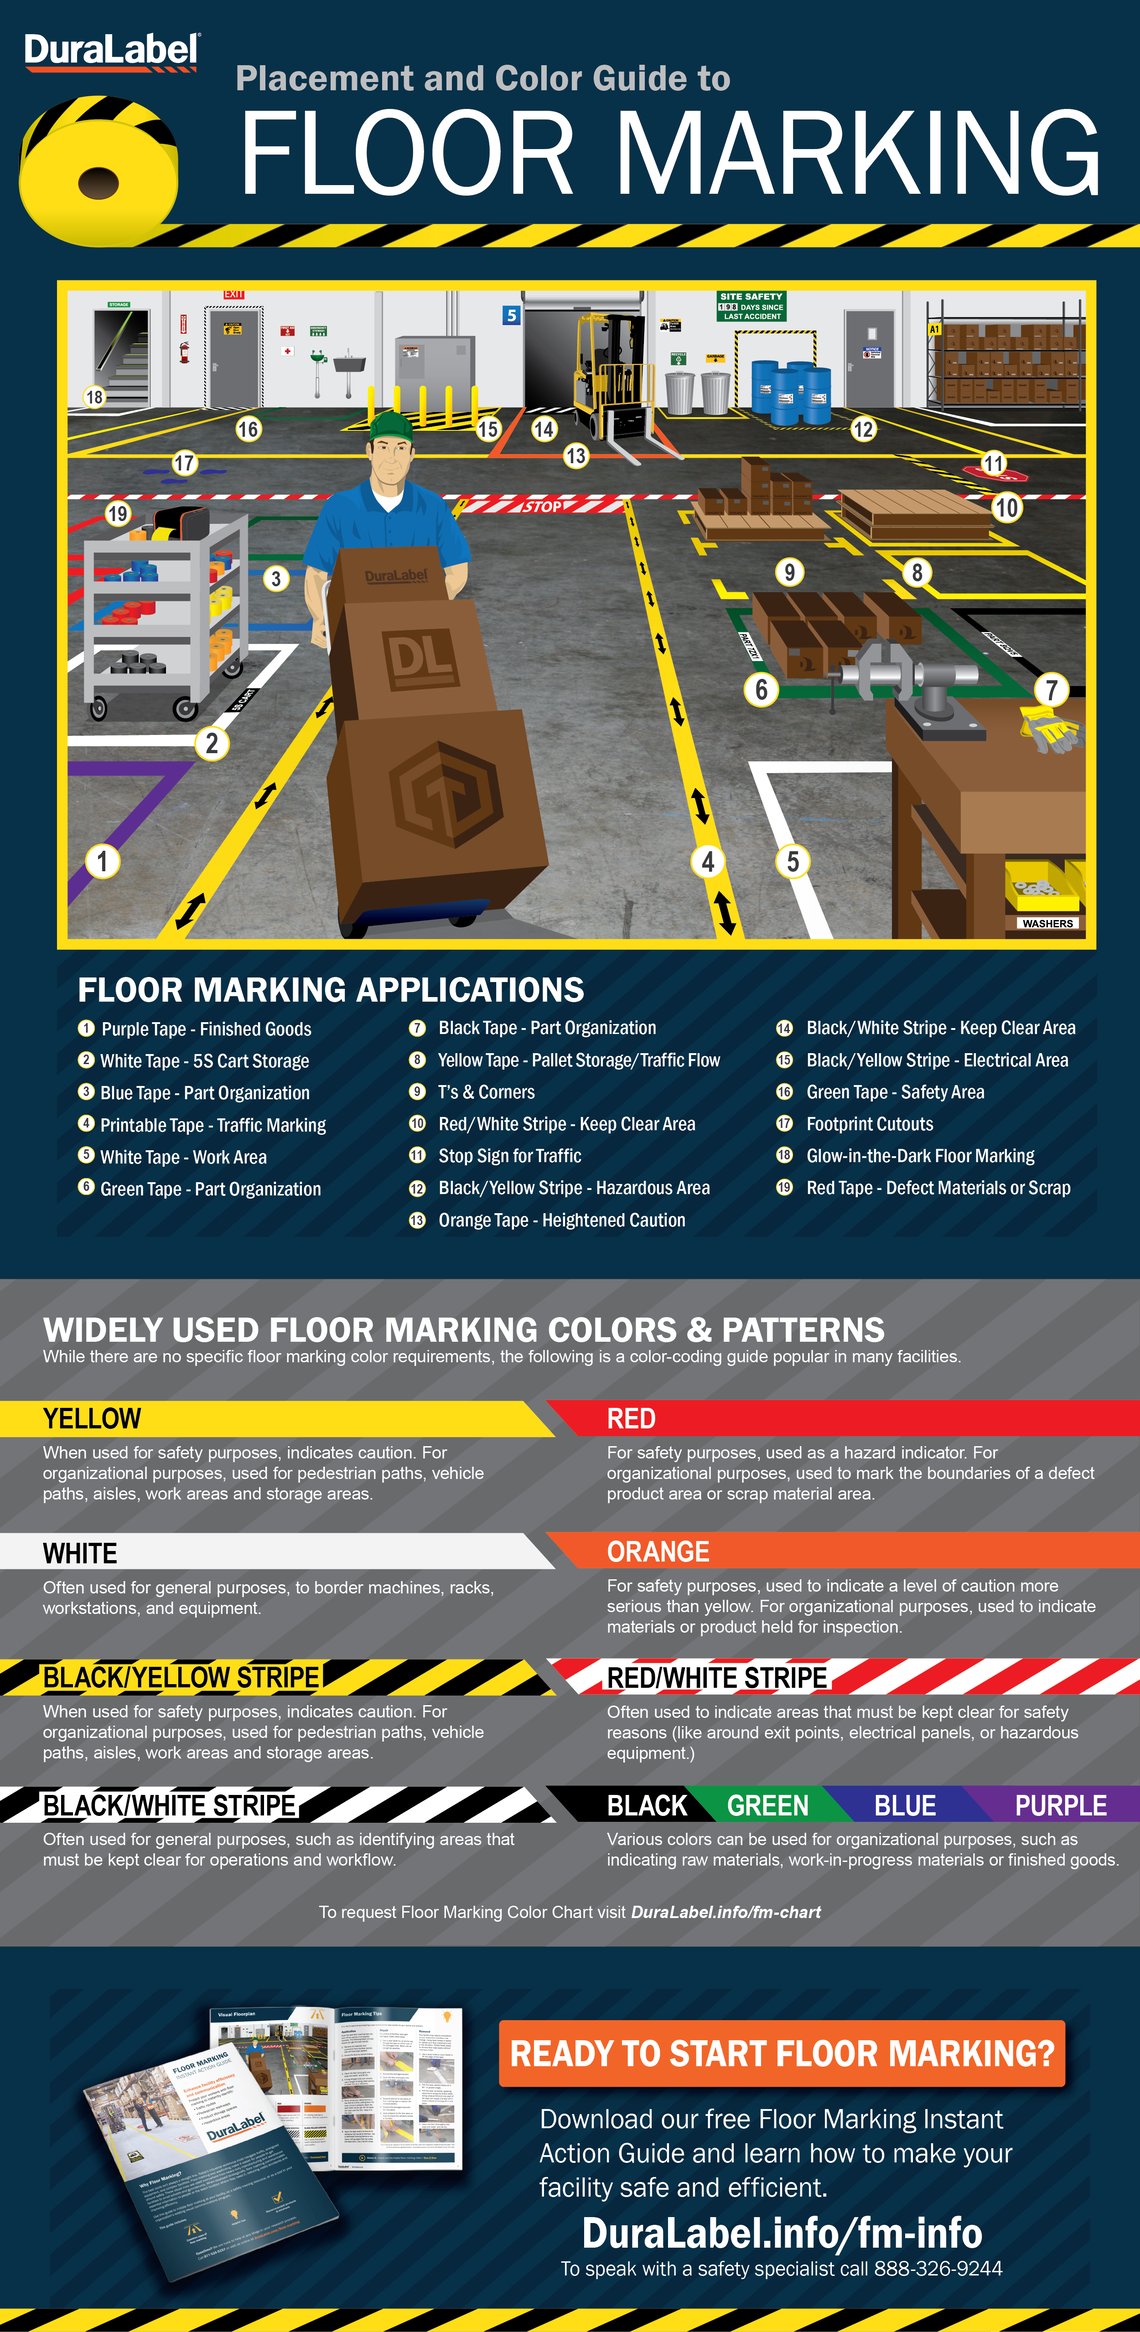 Floormarking-infographic-1-29-24_V4